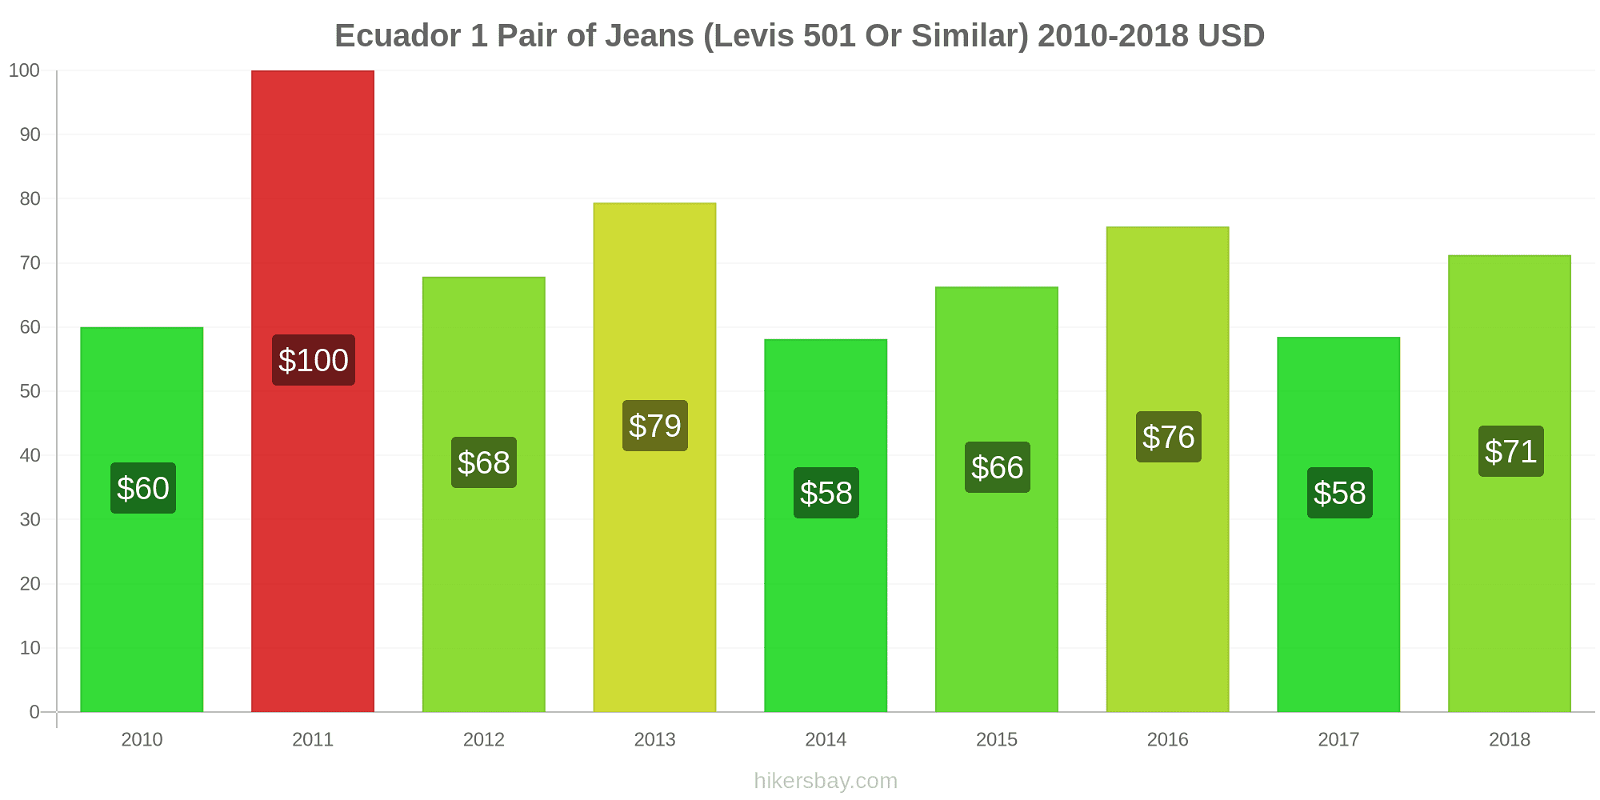 Ecuador price changes 1 pair of jeans (Levis 501 or similar) hikersbay.com